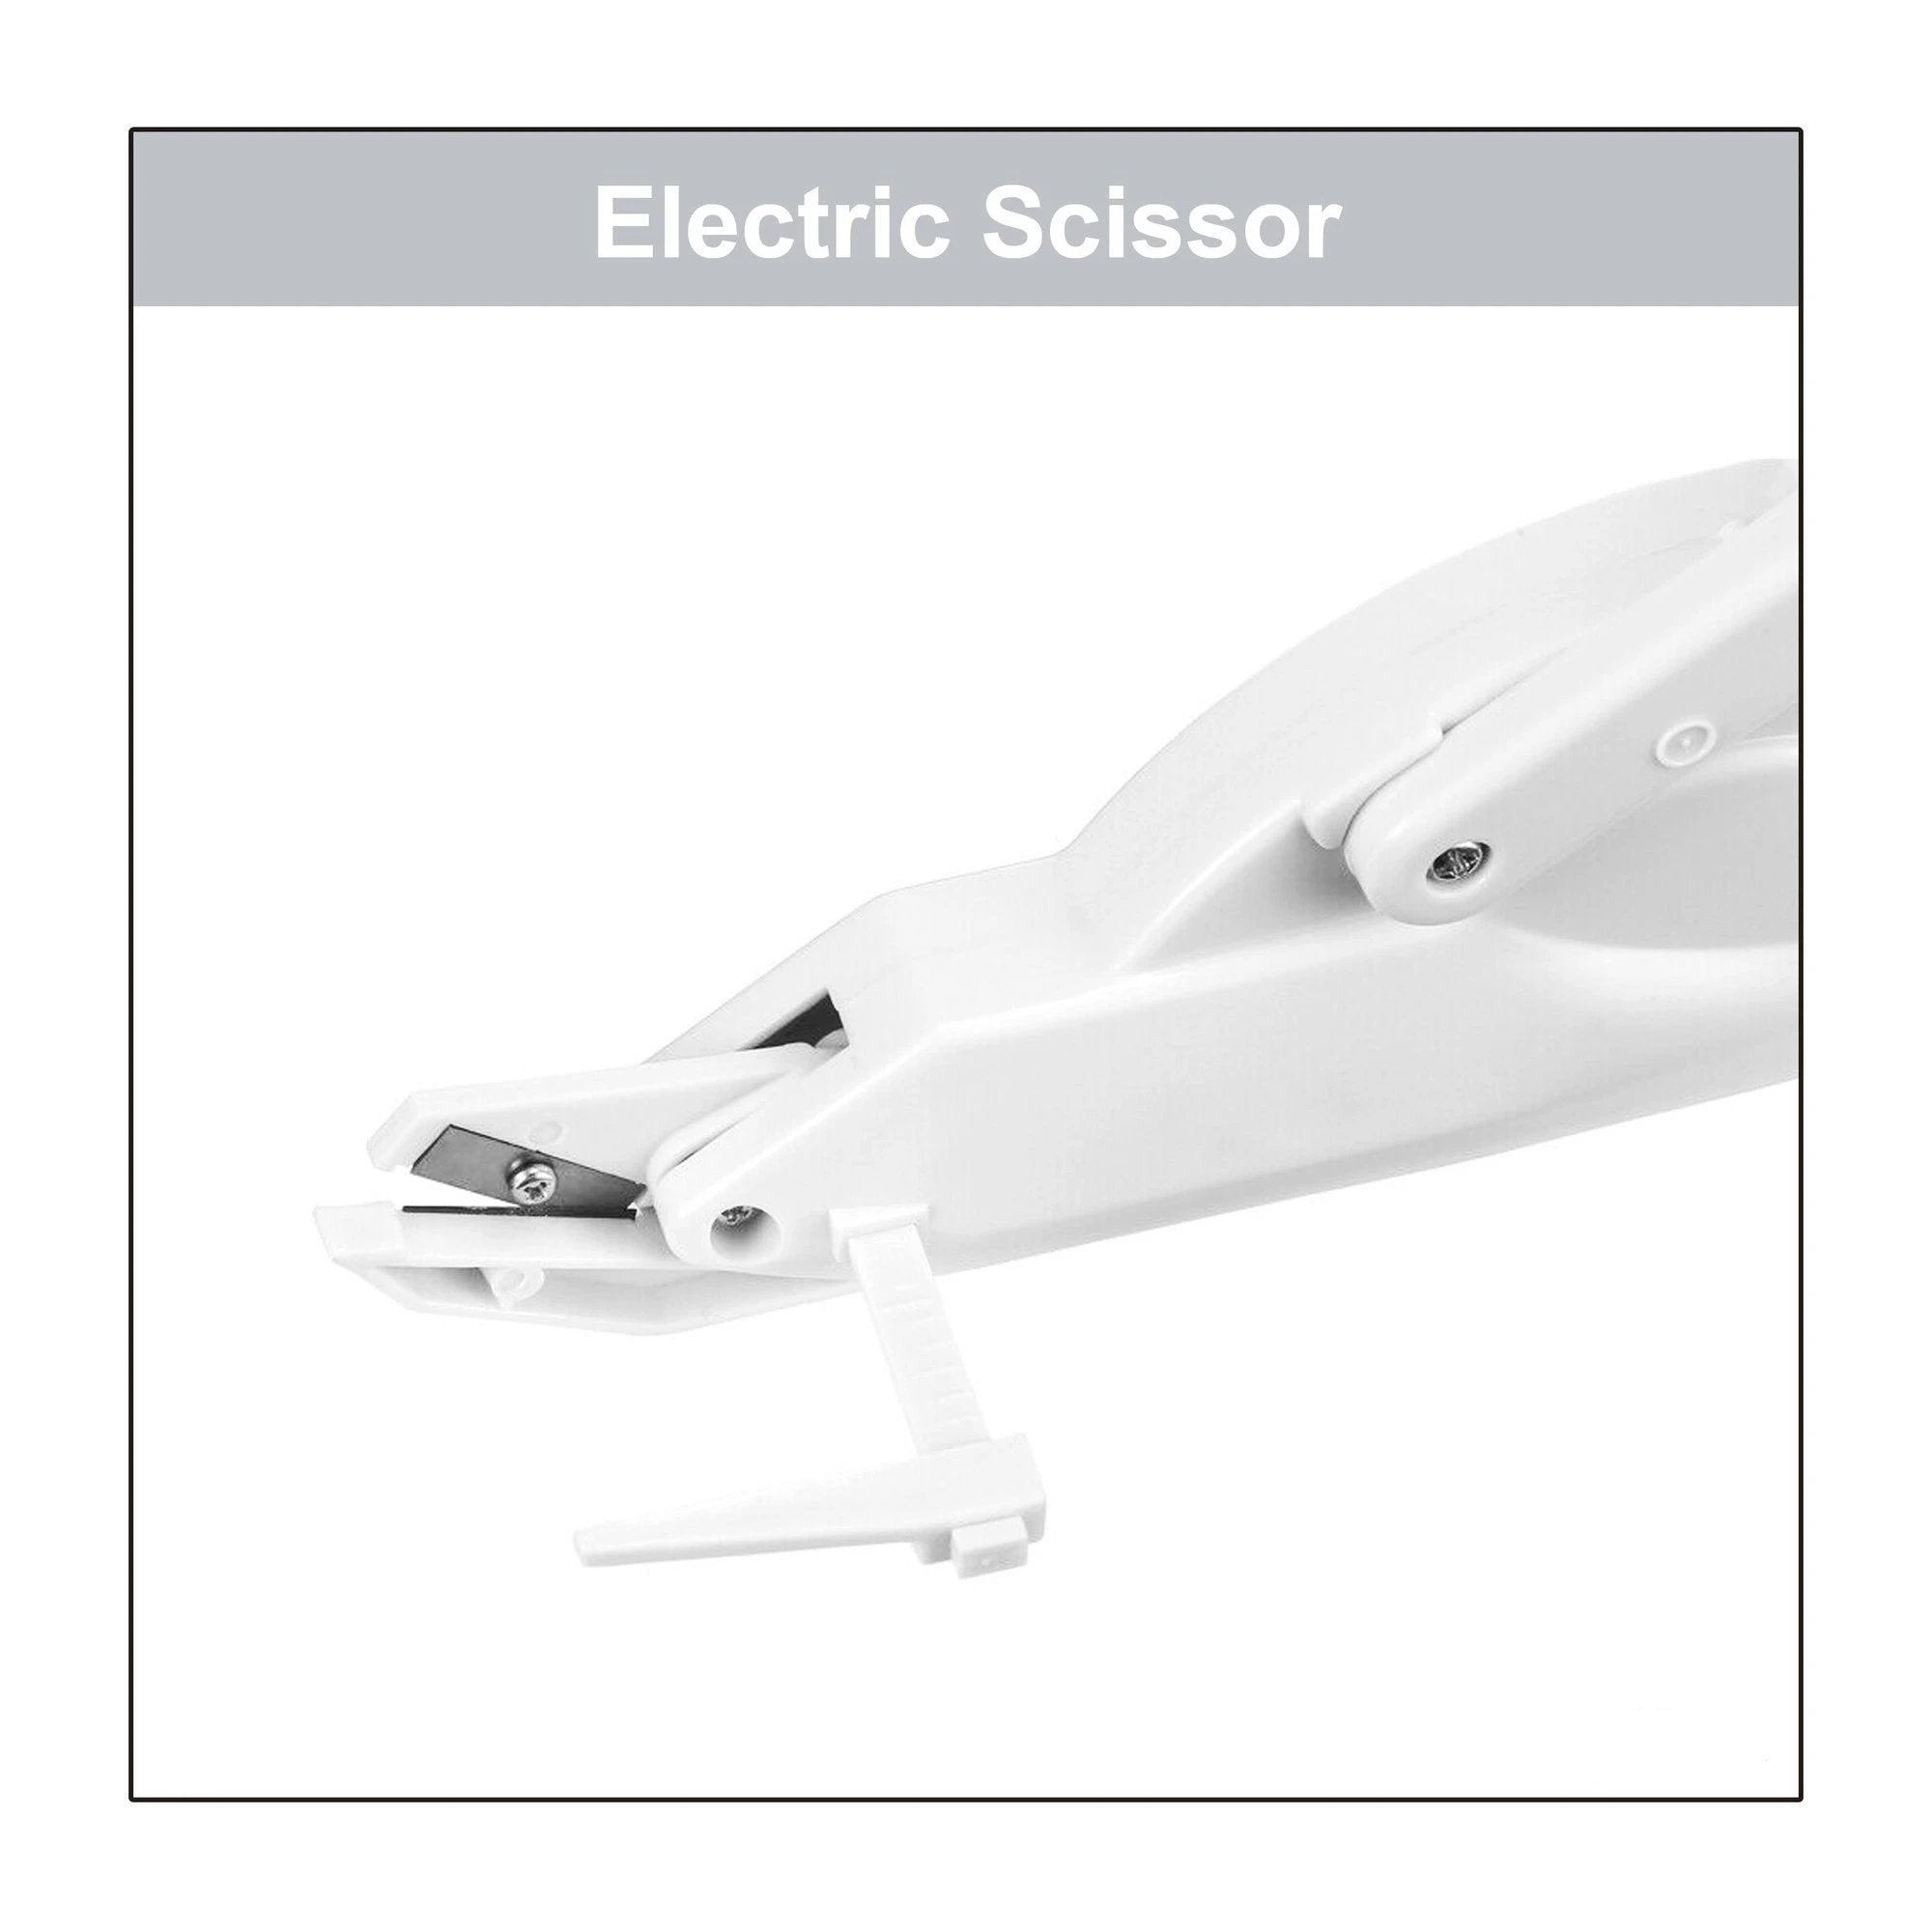 Electric Scissors